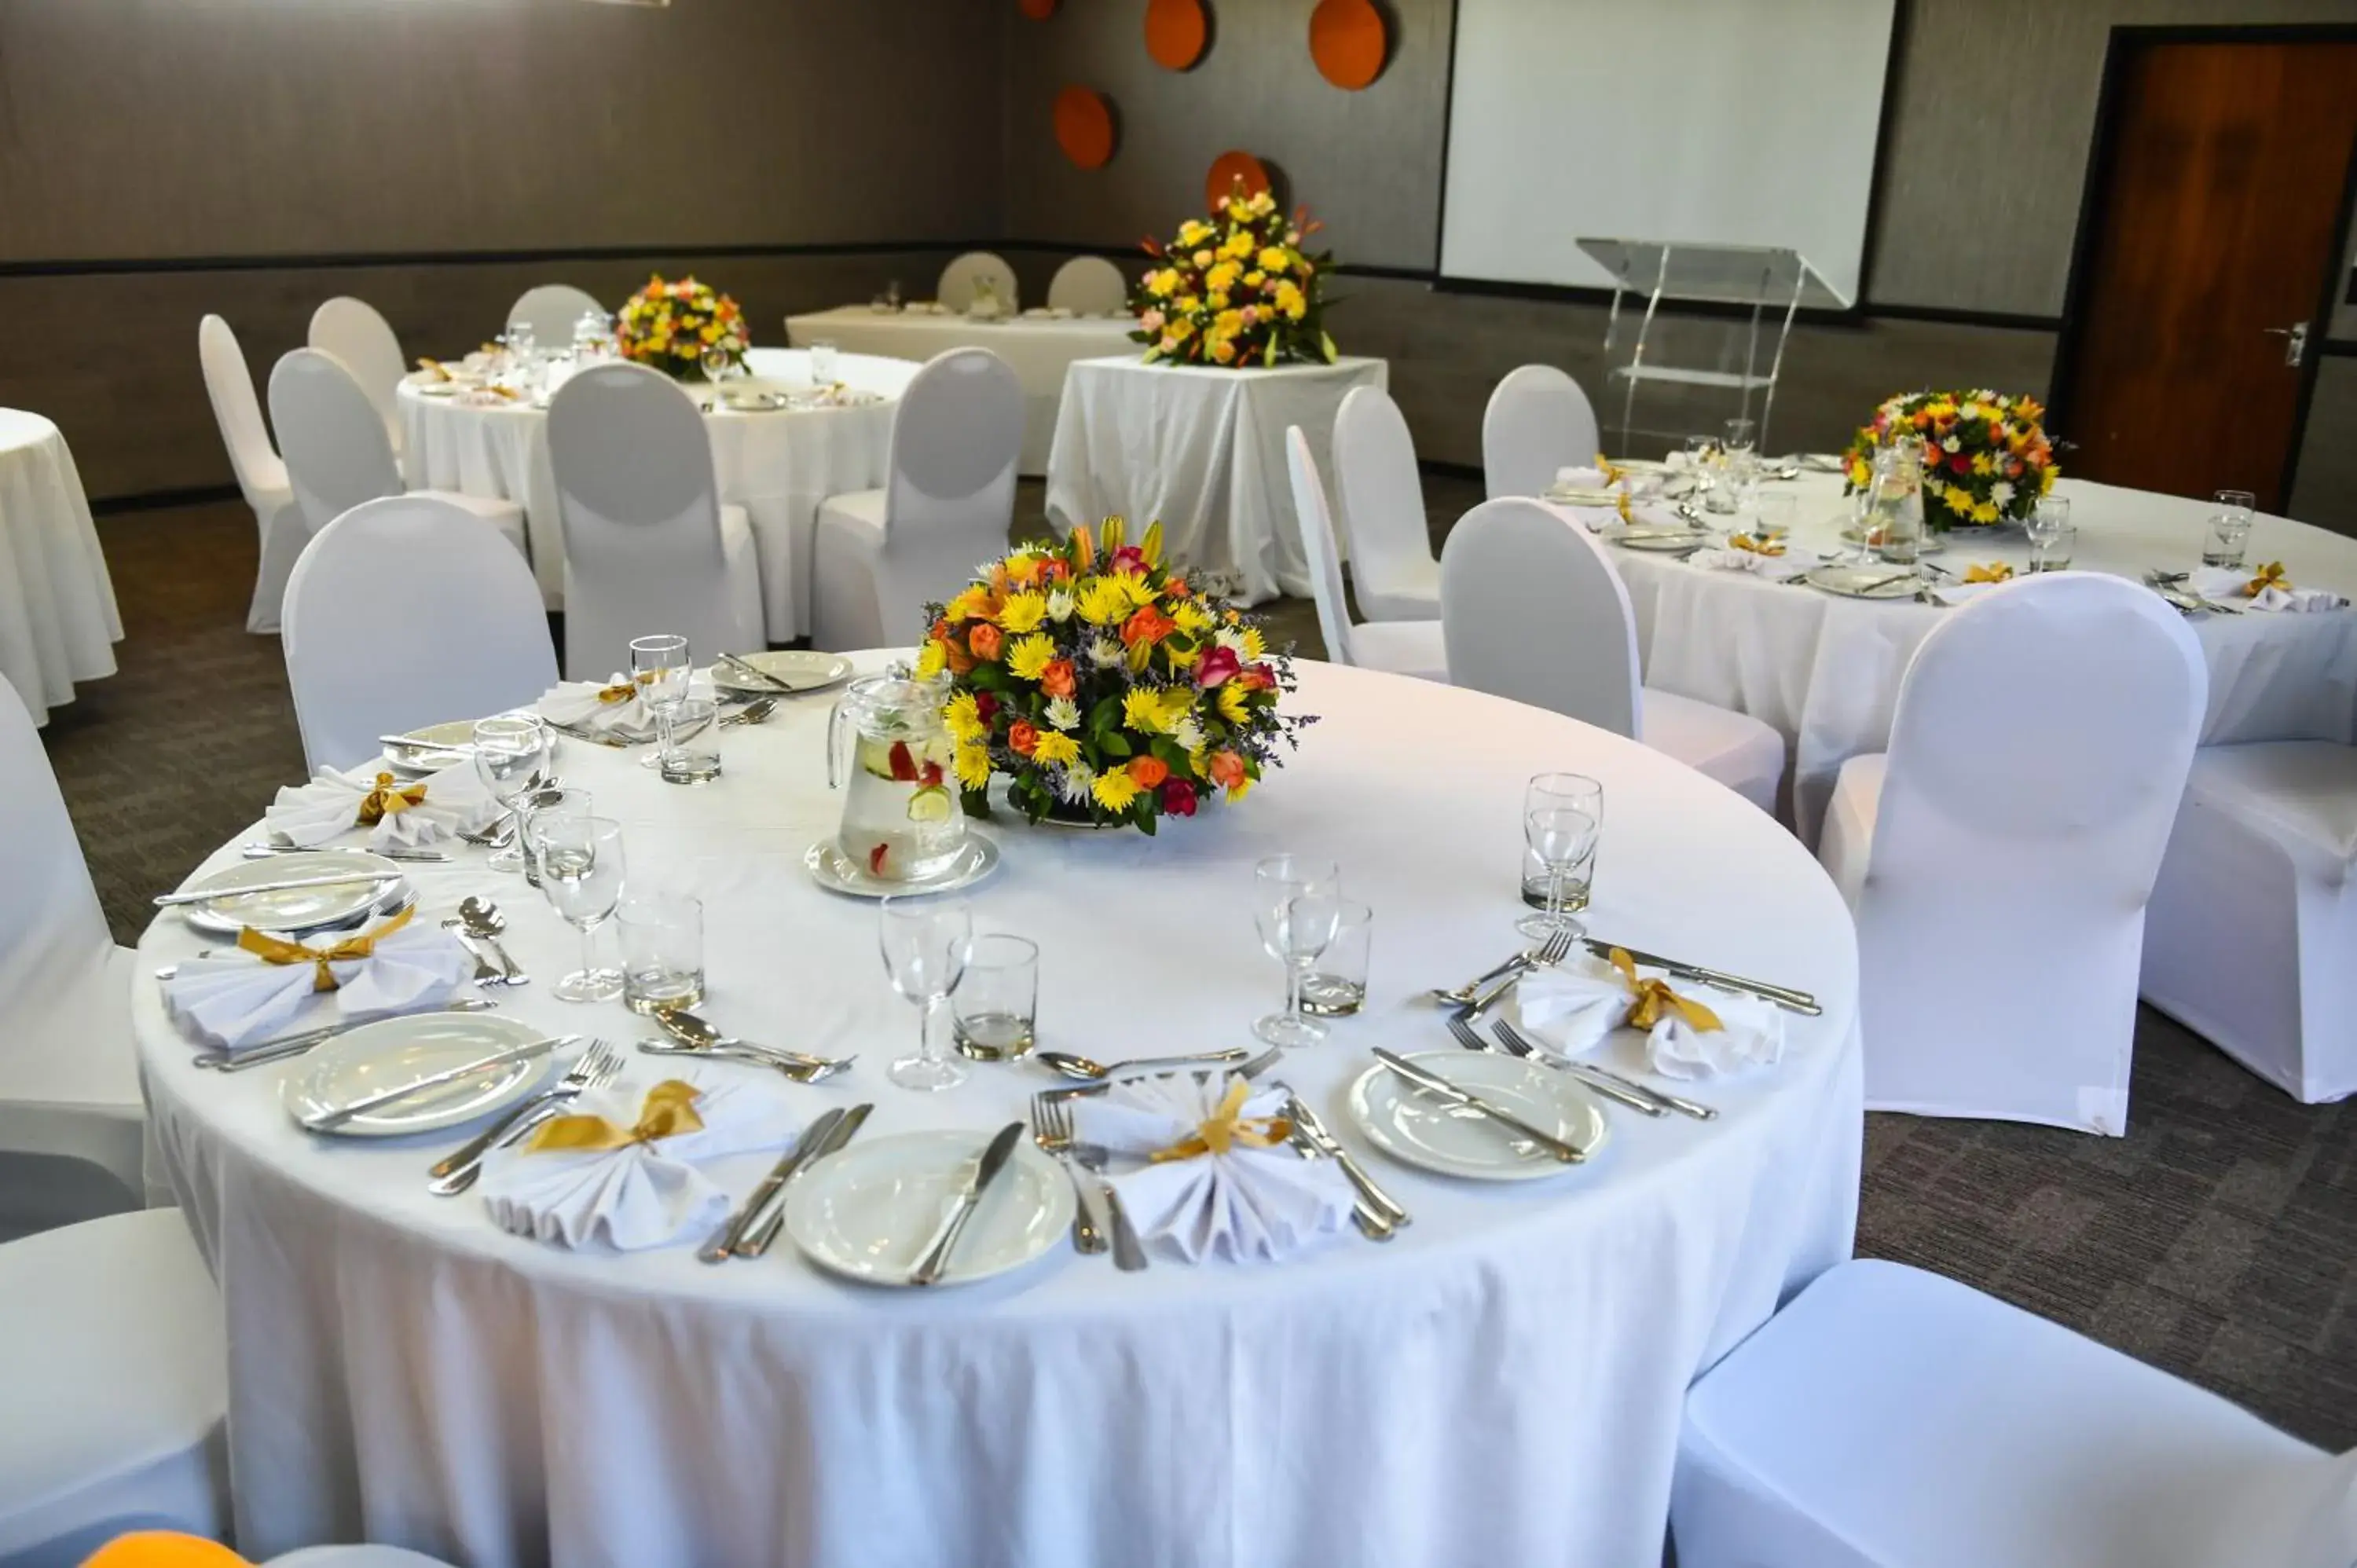 Banquet/Function facilities, Banquet Facilities in CedarWoods of Sandton